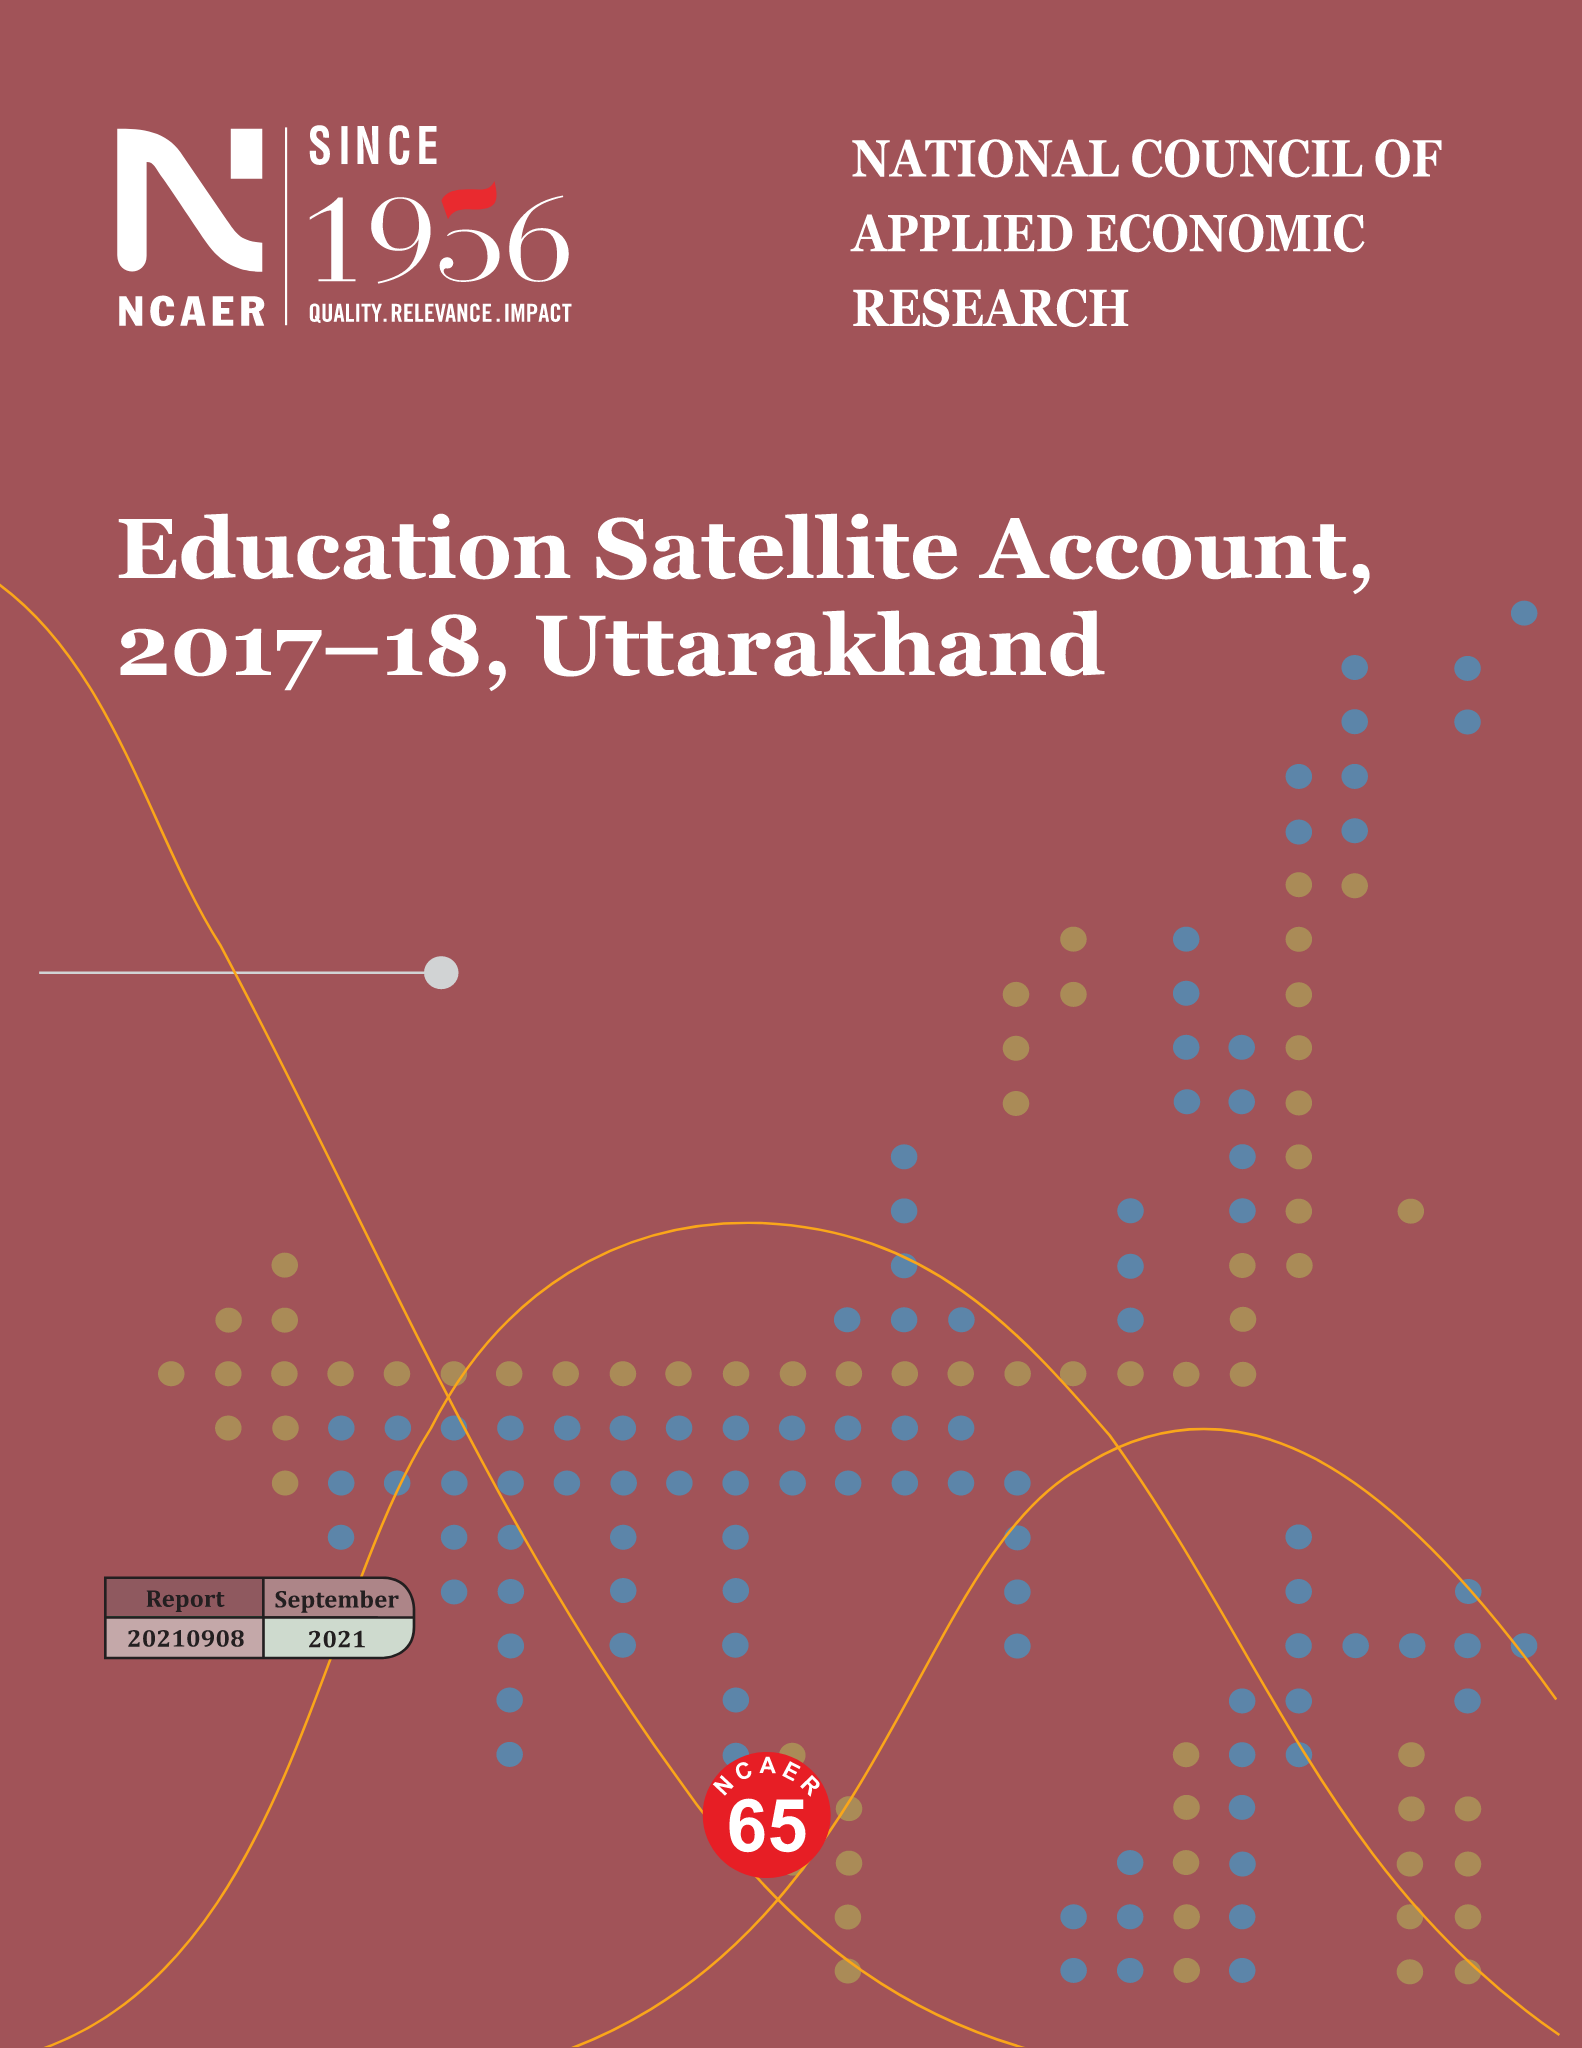 Education Satellite Account 2017-18, Uttarakhand